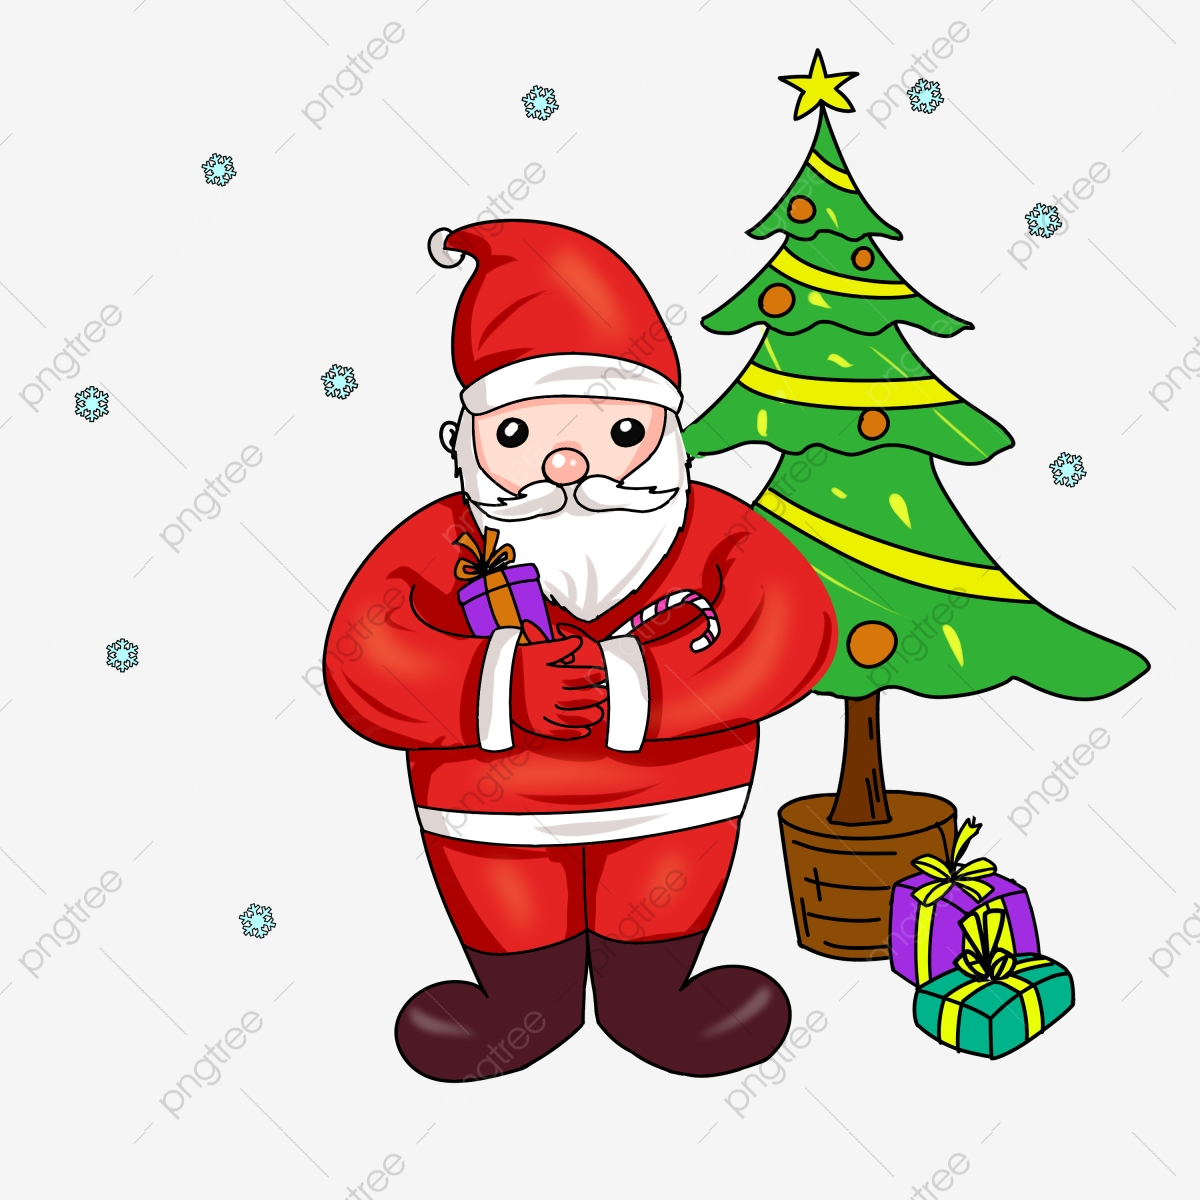 pngtree-santa-claus-christmas-tree-hand-drawn-illustration-cartoon-old-man-png-image_3825846.jpg